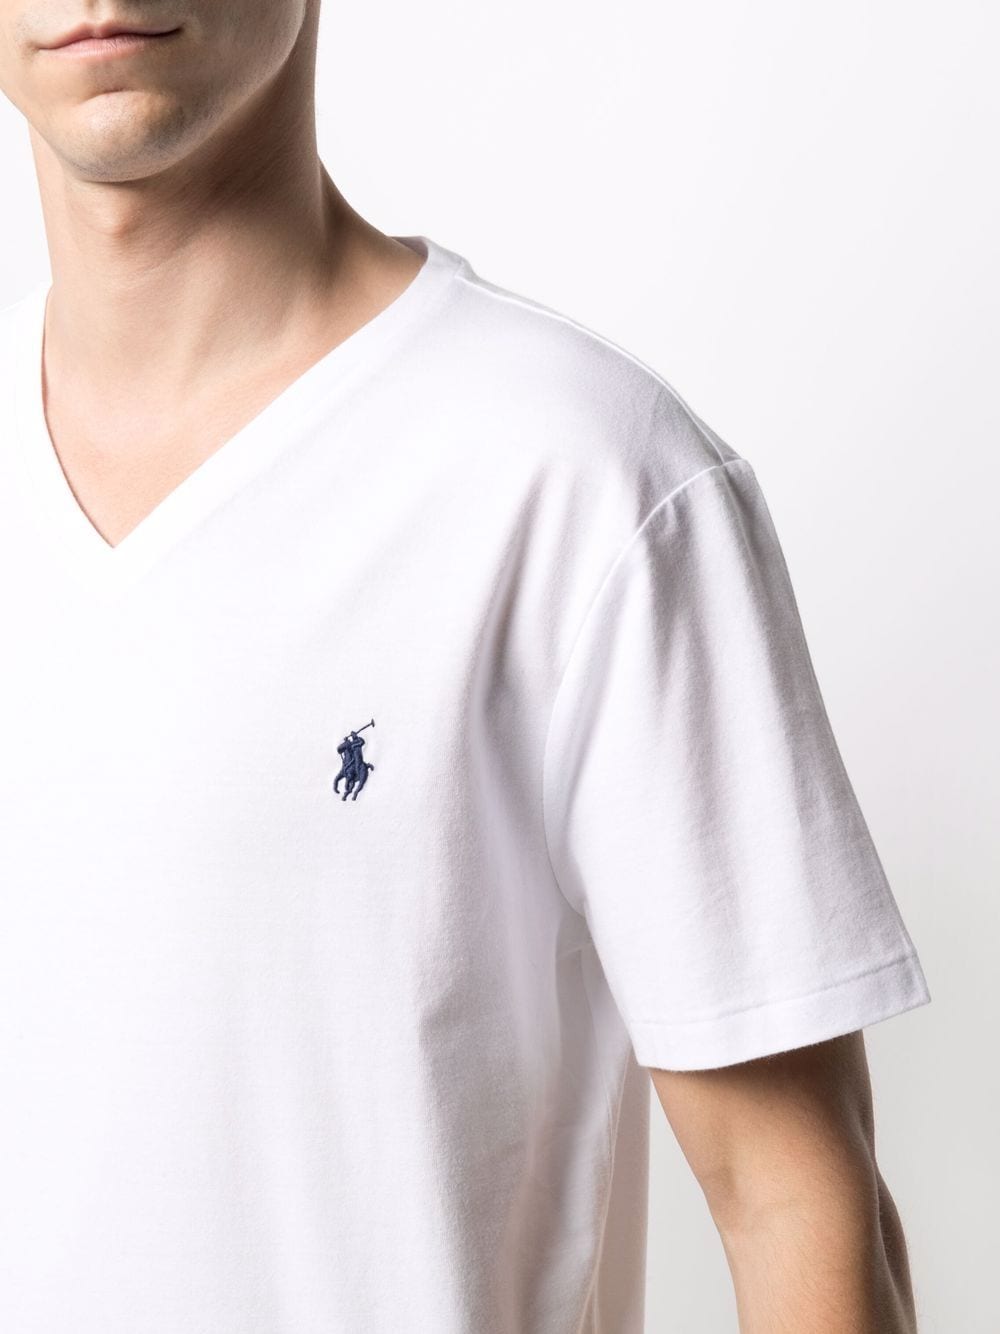 Polo Ralph Lauren Women's Embroidered-Logo V-Neck T-Shirt